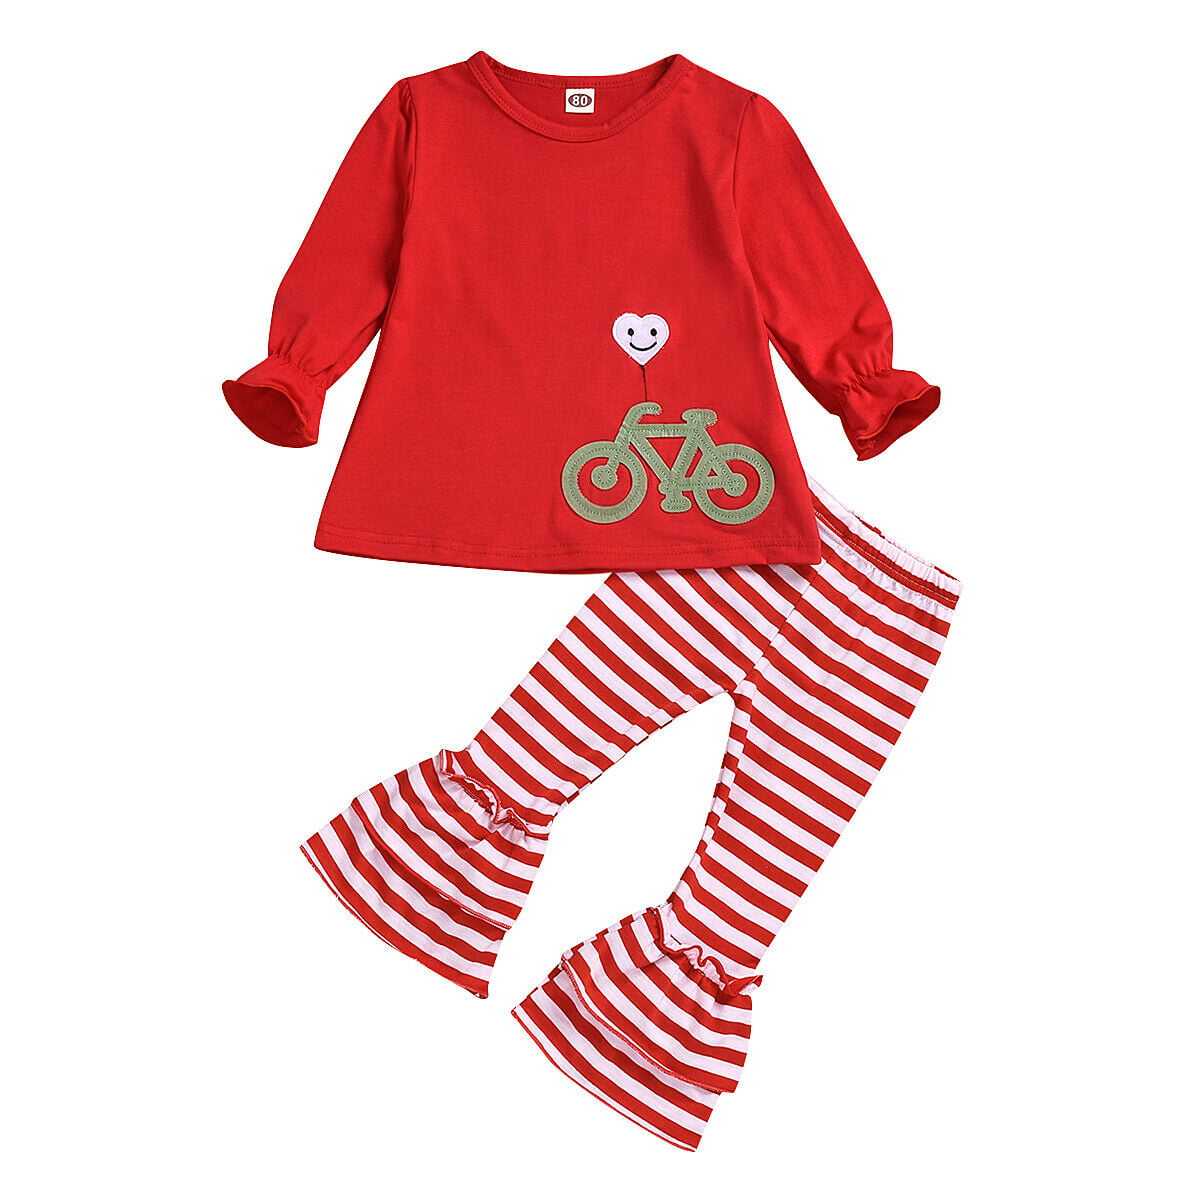 RNTOP_Clothes Christmas Kids Baby Girl Boys Stripe T-shirt Tops+Pants 2PCS Set Outfits Clothes 2-7T